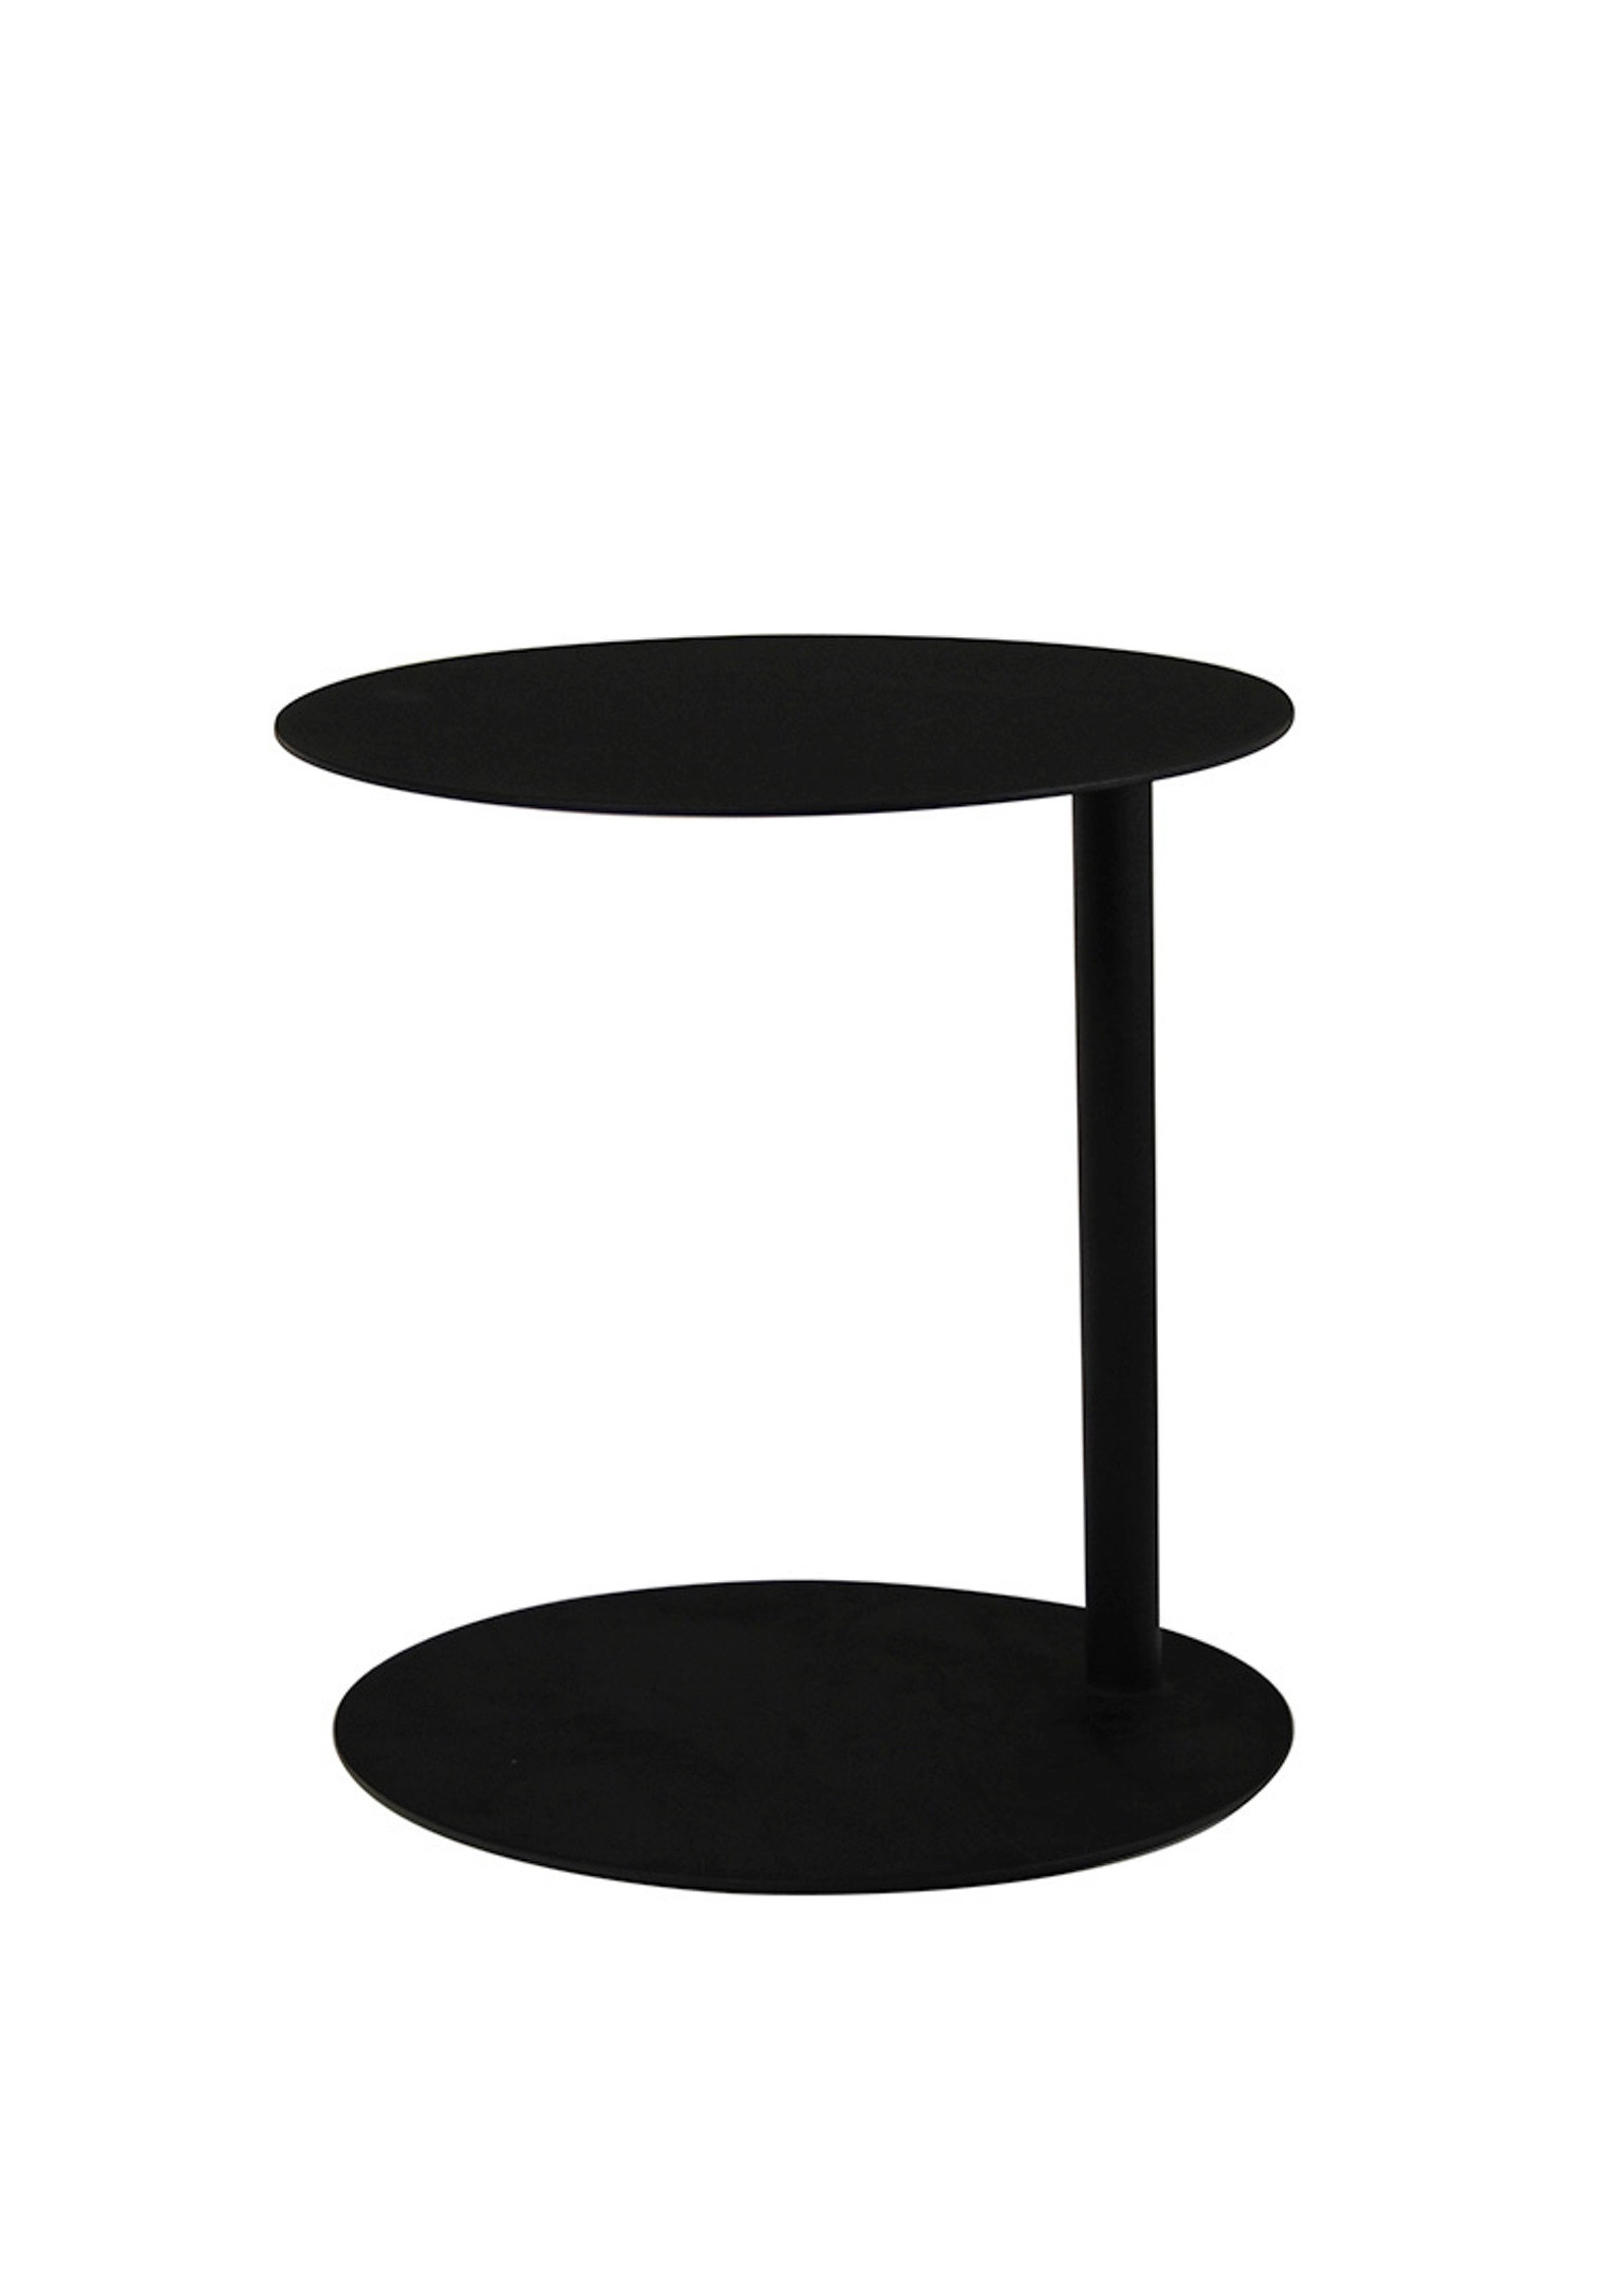 Samera Round Side Table in Black